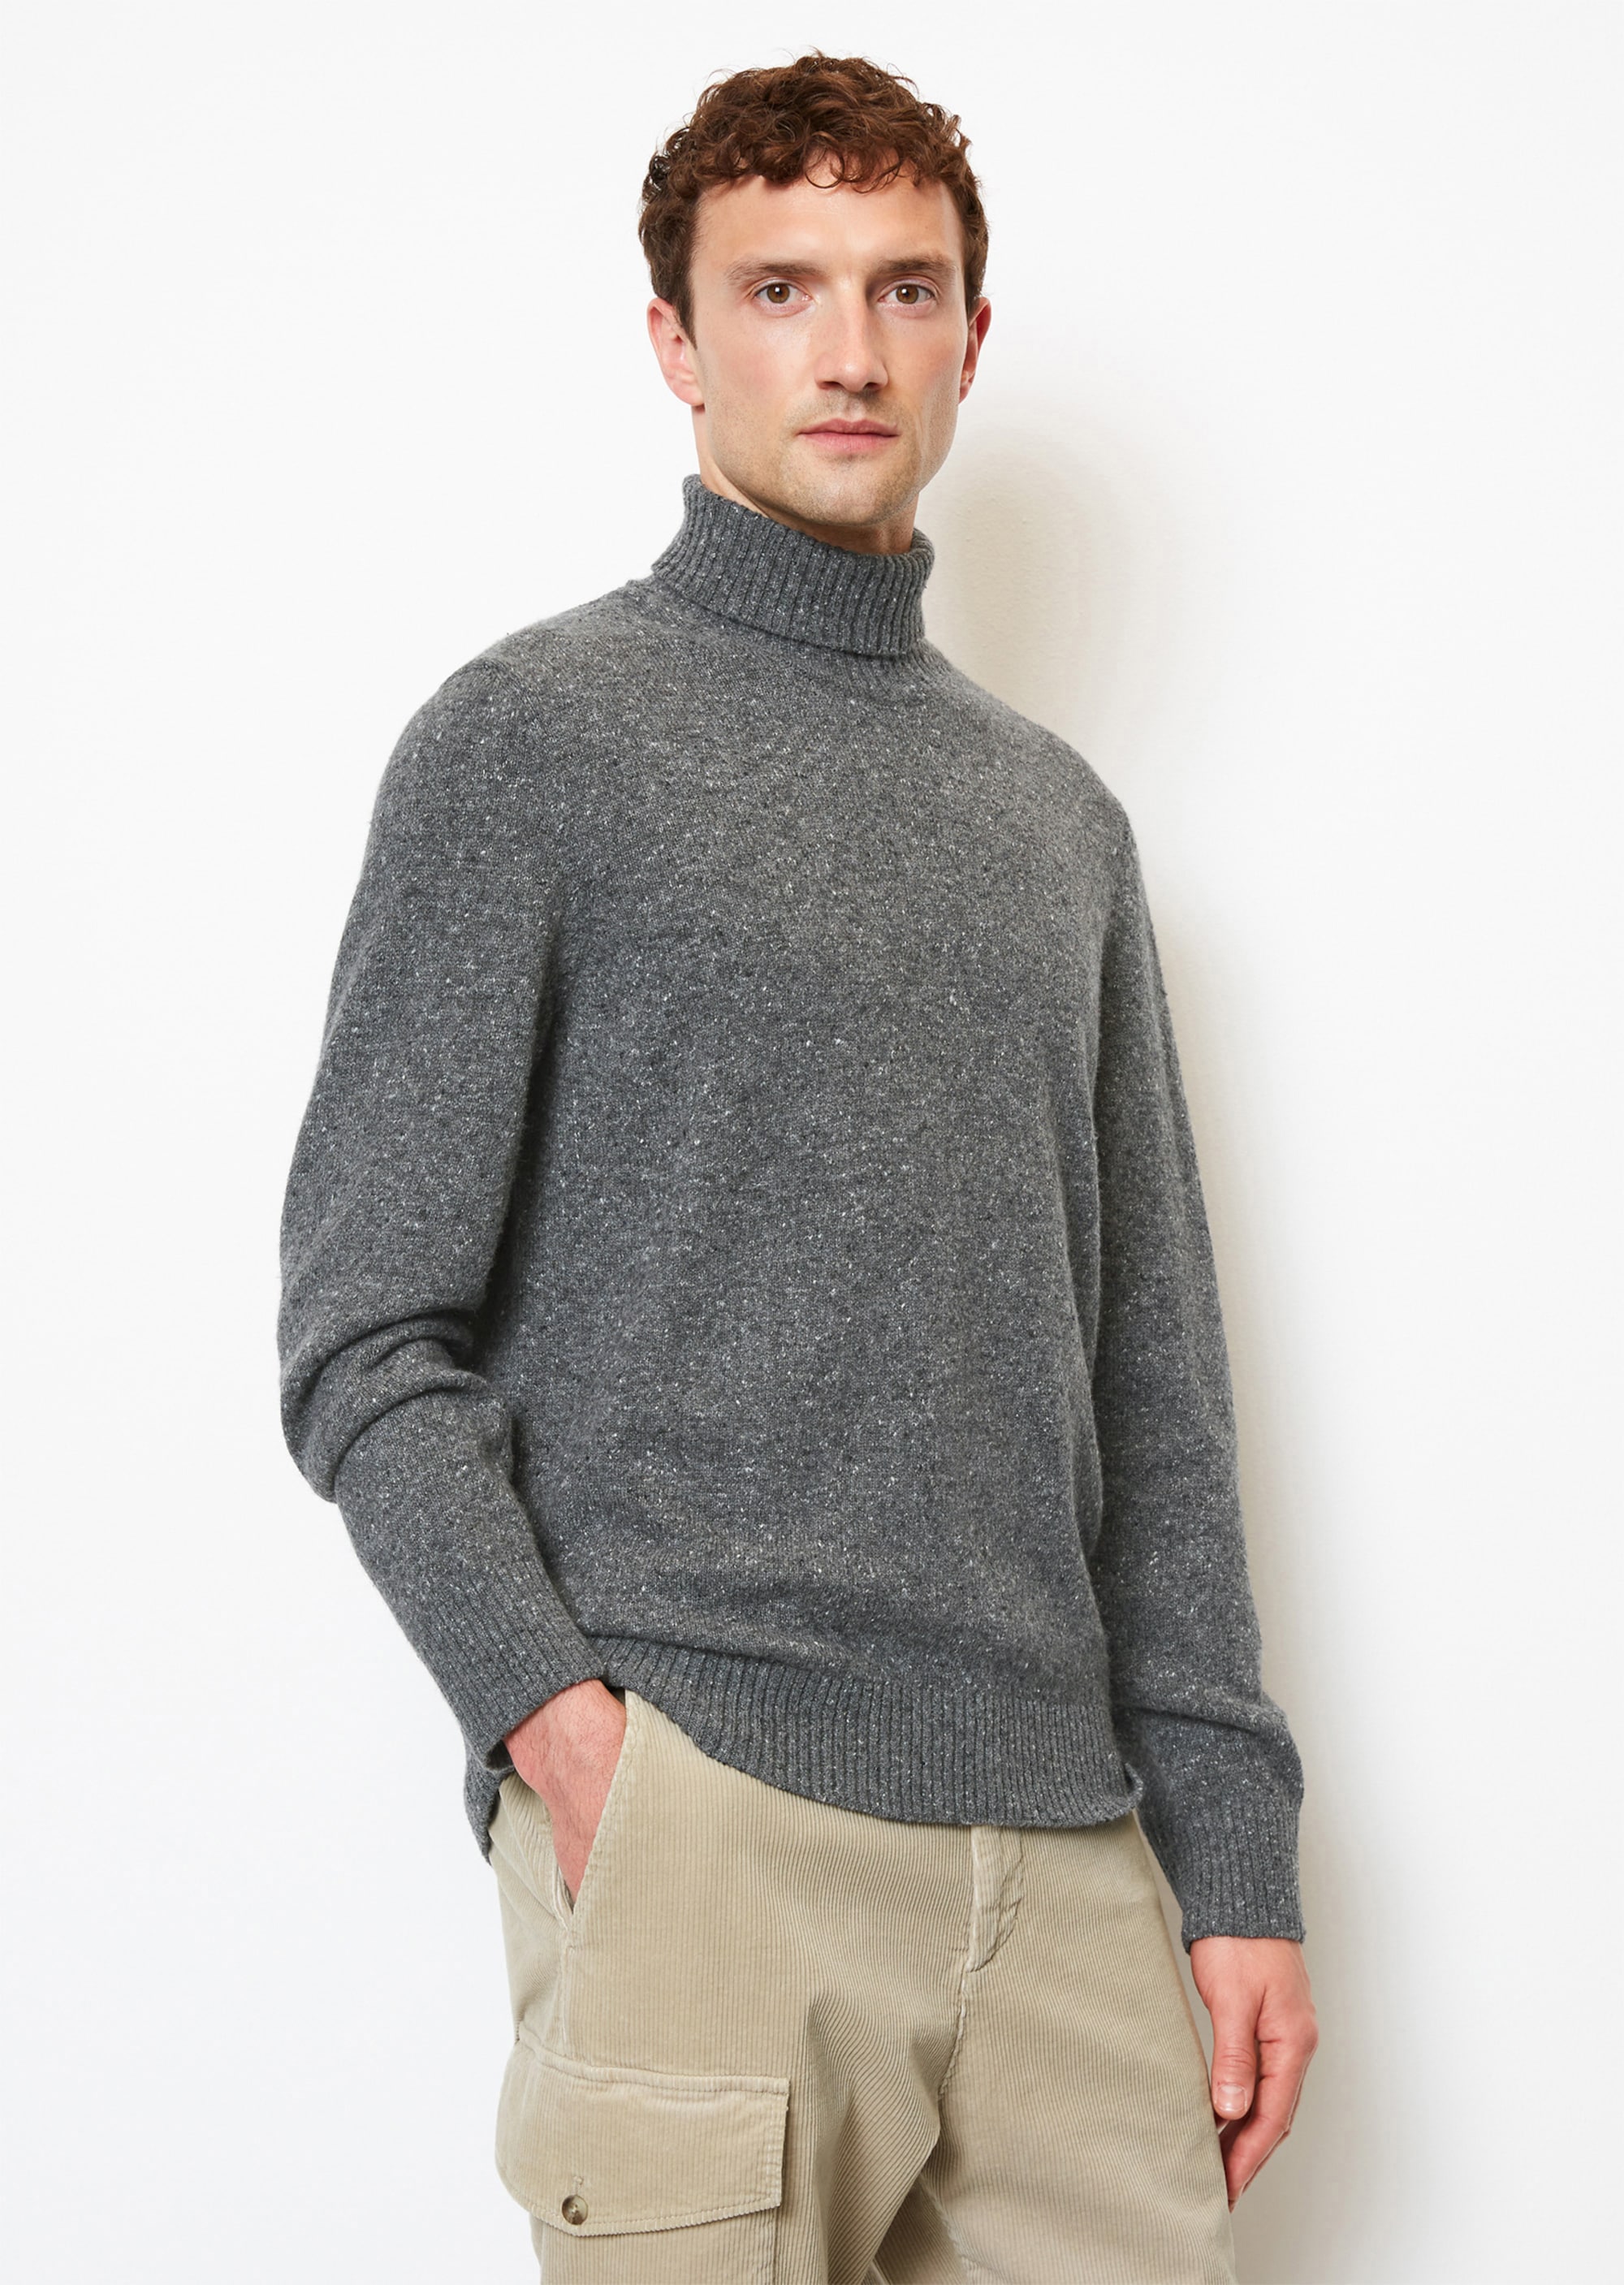 Turtleneck sweater regular from speckled tweed yarn - gray | Turtle